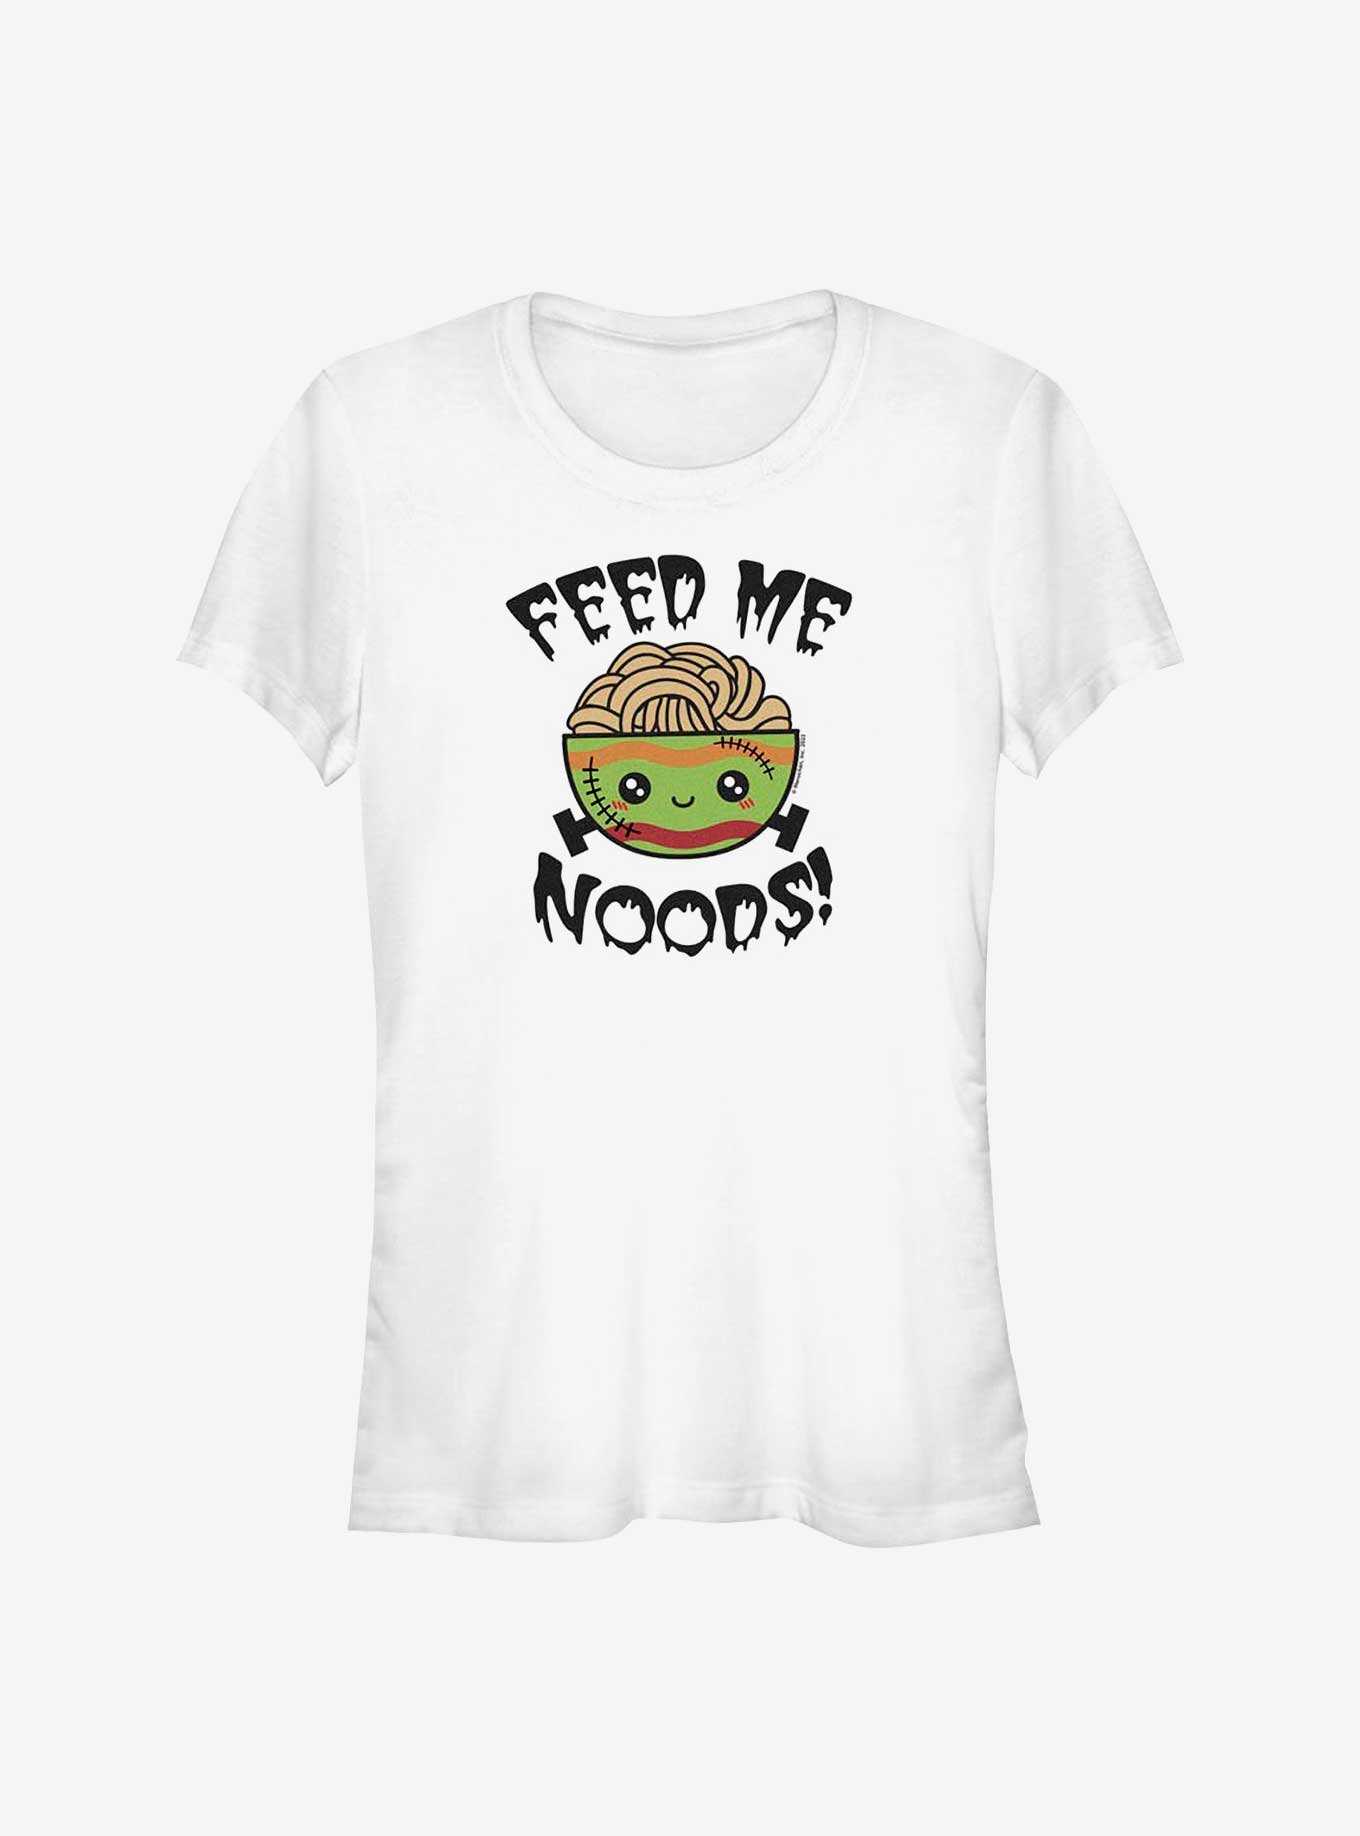 Maruchan Feed Me Noods Girls T-Shirt, , hi-res